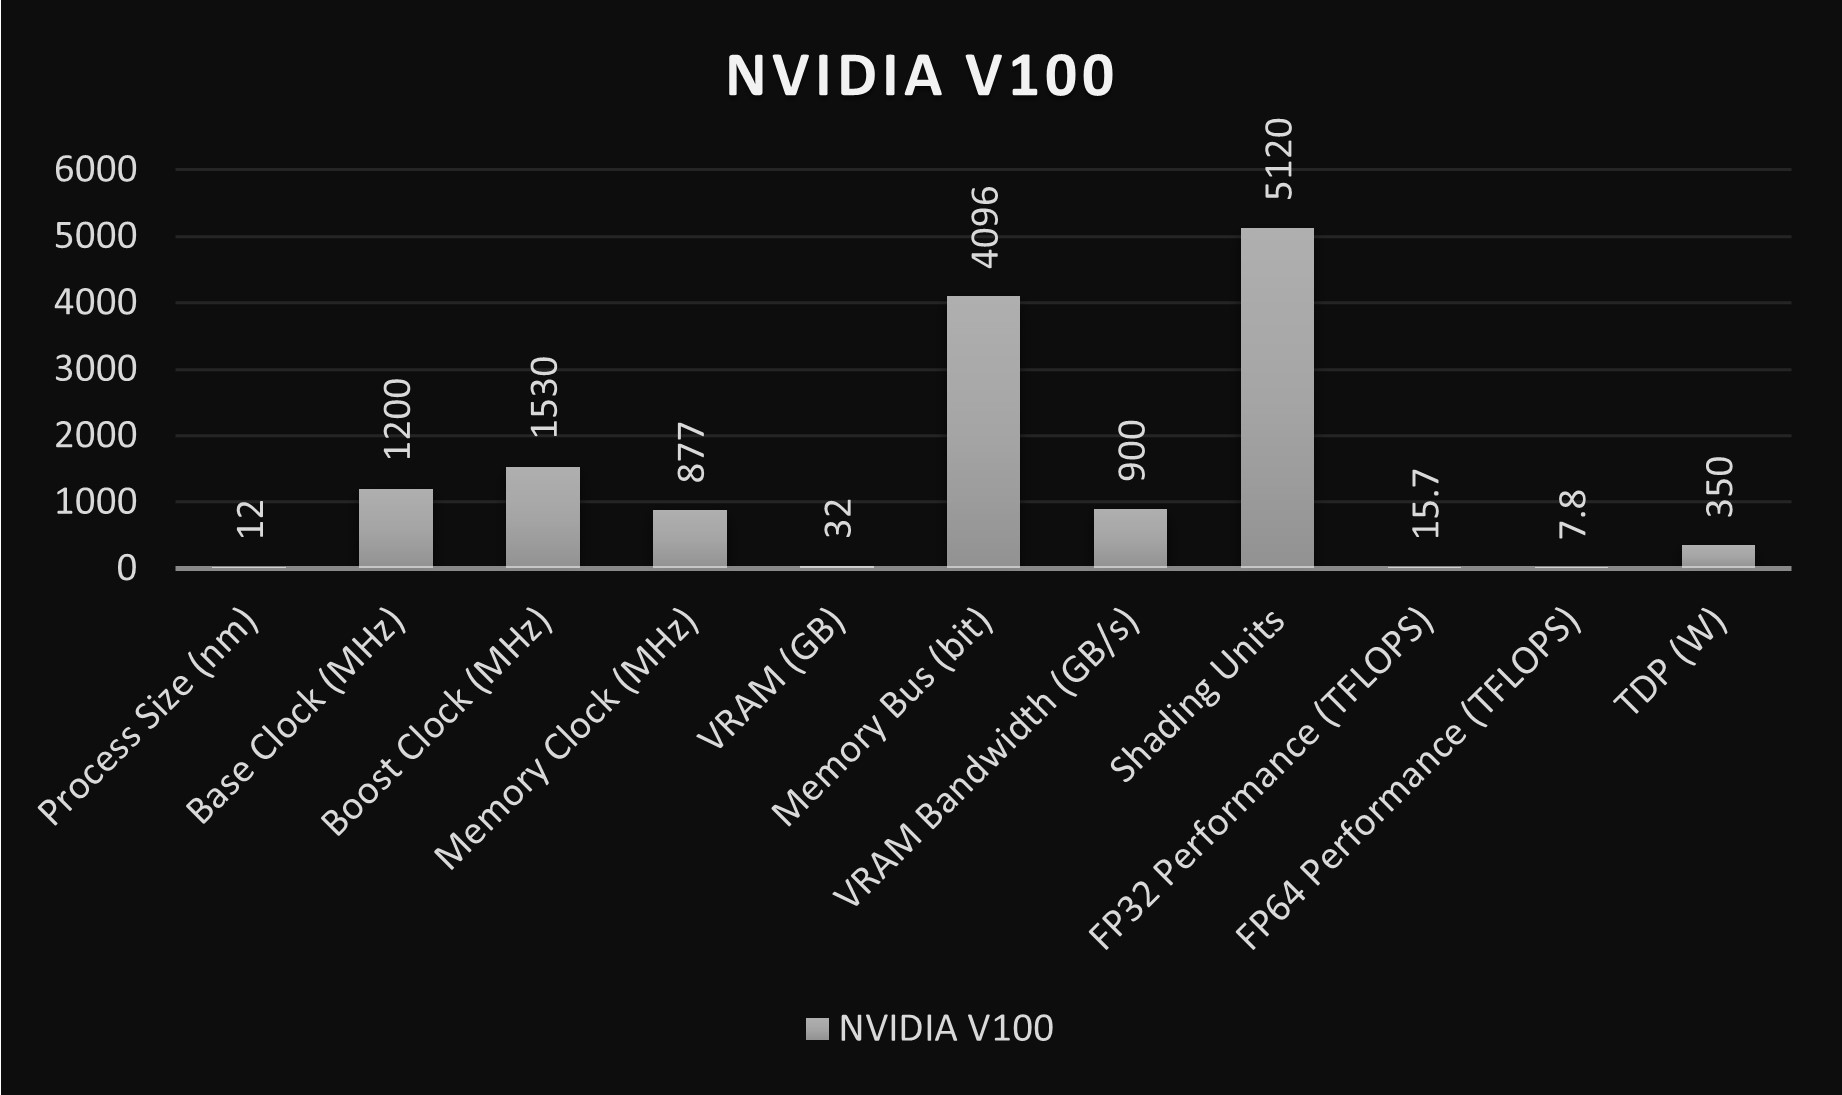 nvidia-a100-vs-v100-image-3